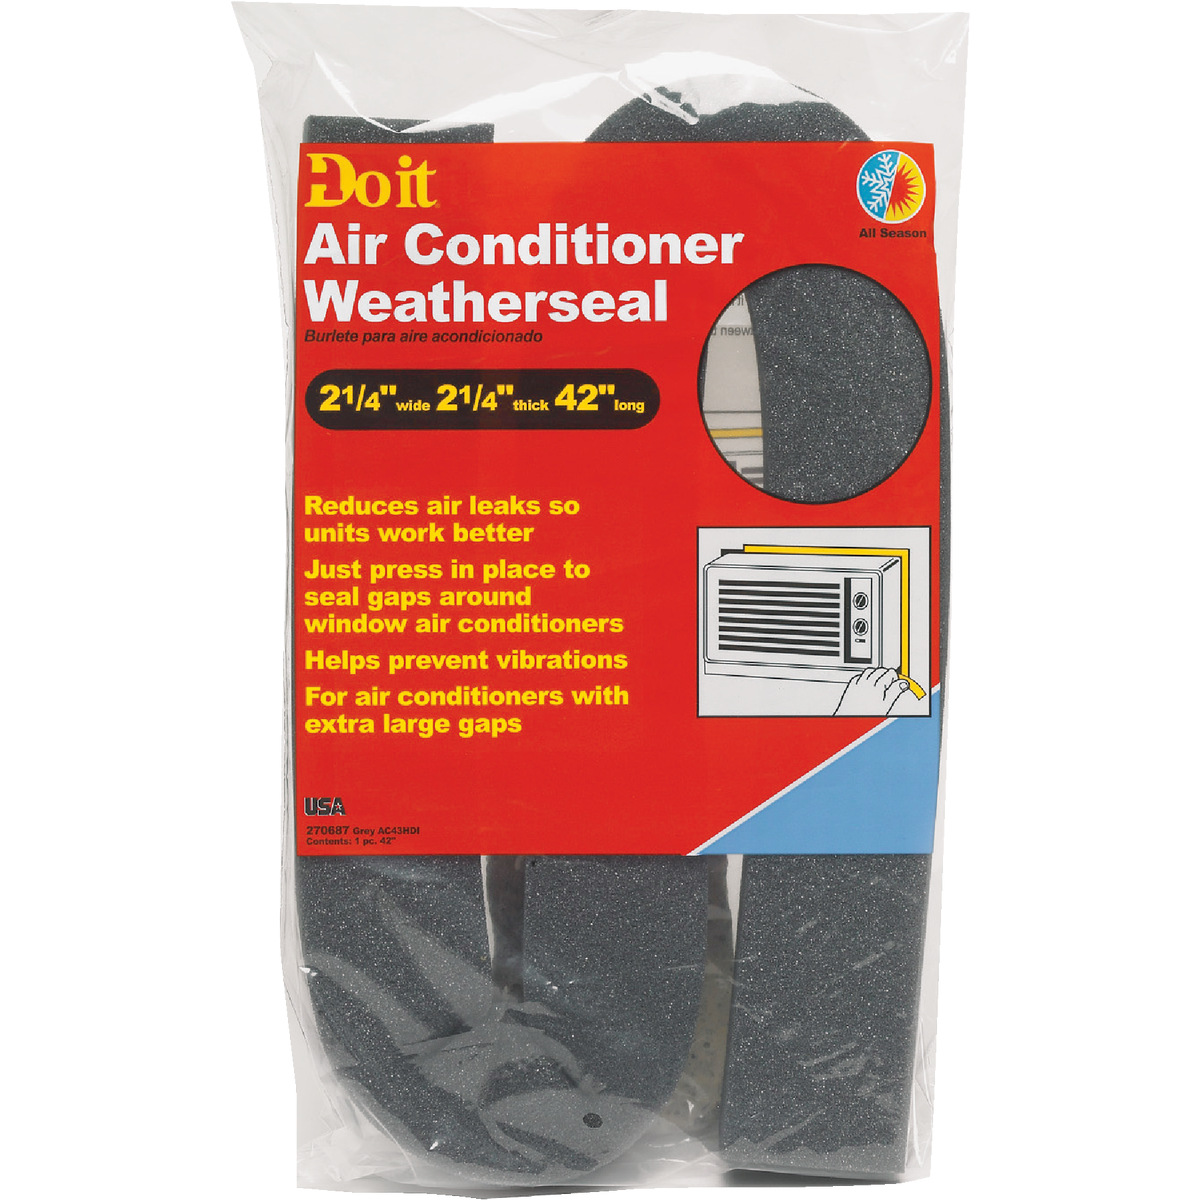 Air Conditioner Weatherproofing